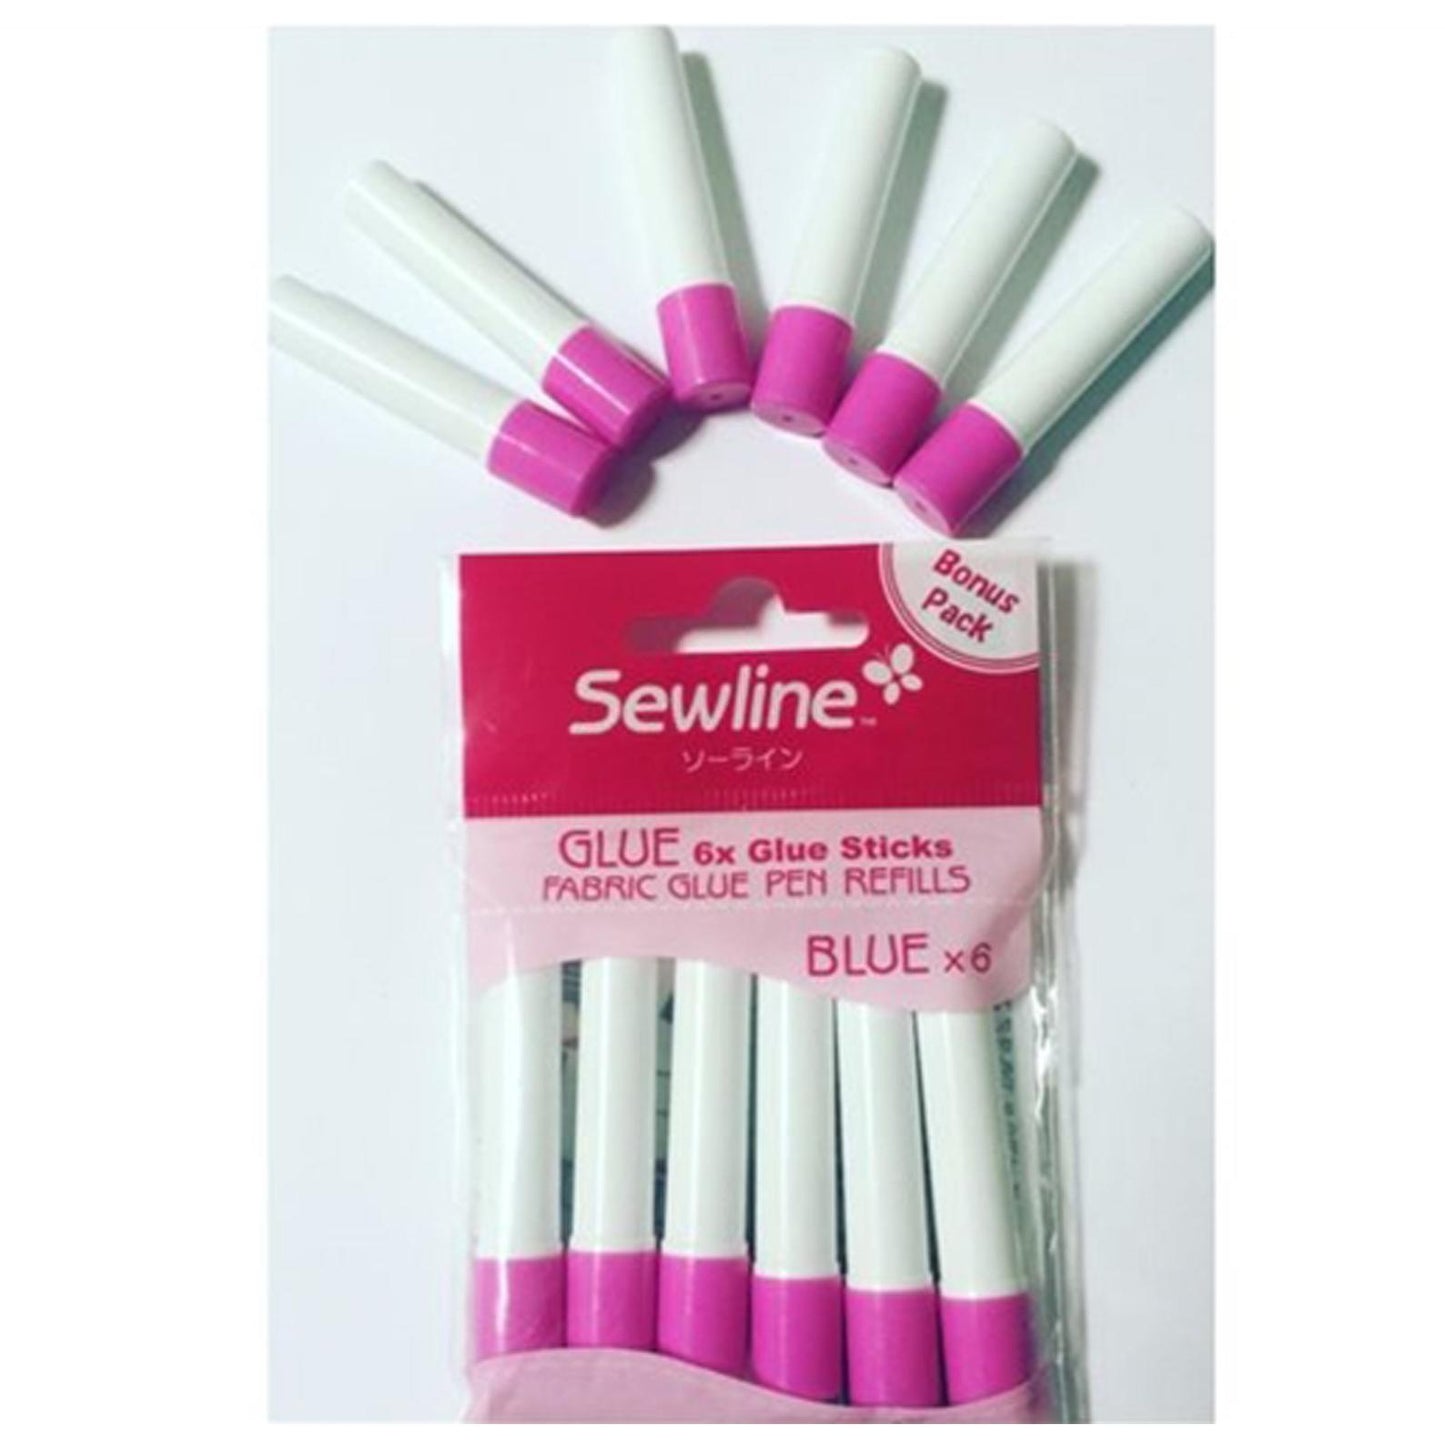 Sewline Fabric Glue Pen Refills - Pack of 6 (Blue)